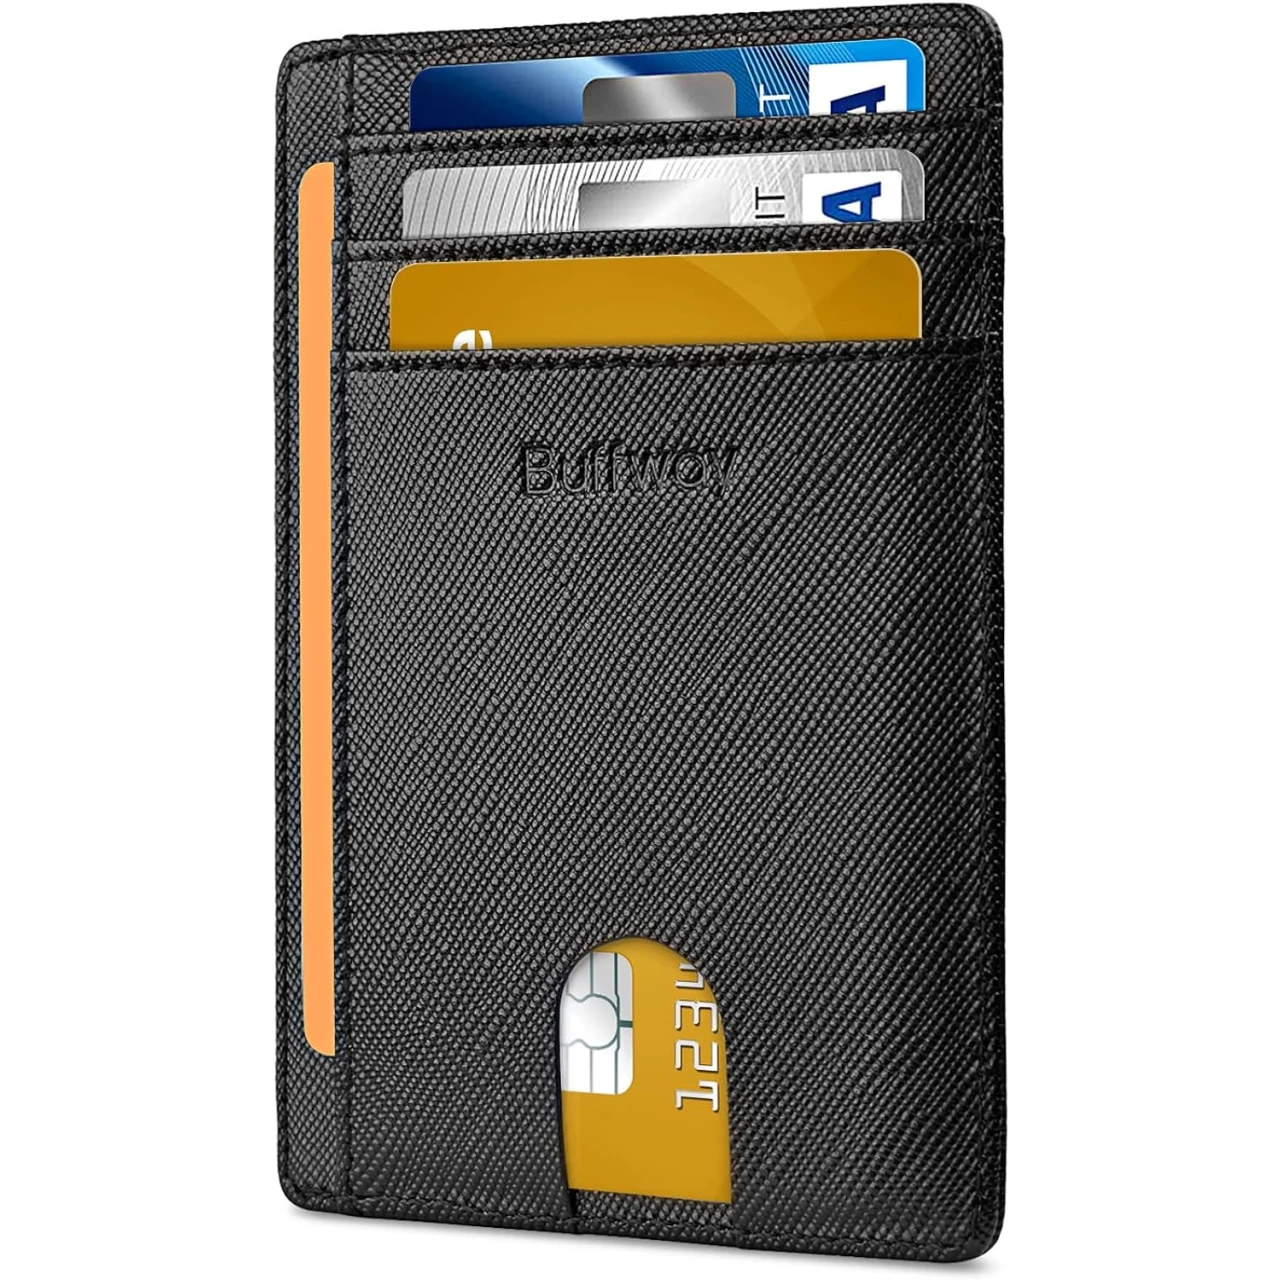 Buffway Slim Minimalist Front Pocket RFID Blocking Leather Wallets